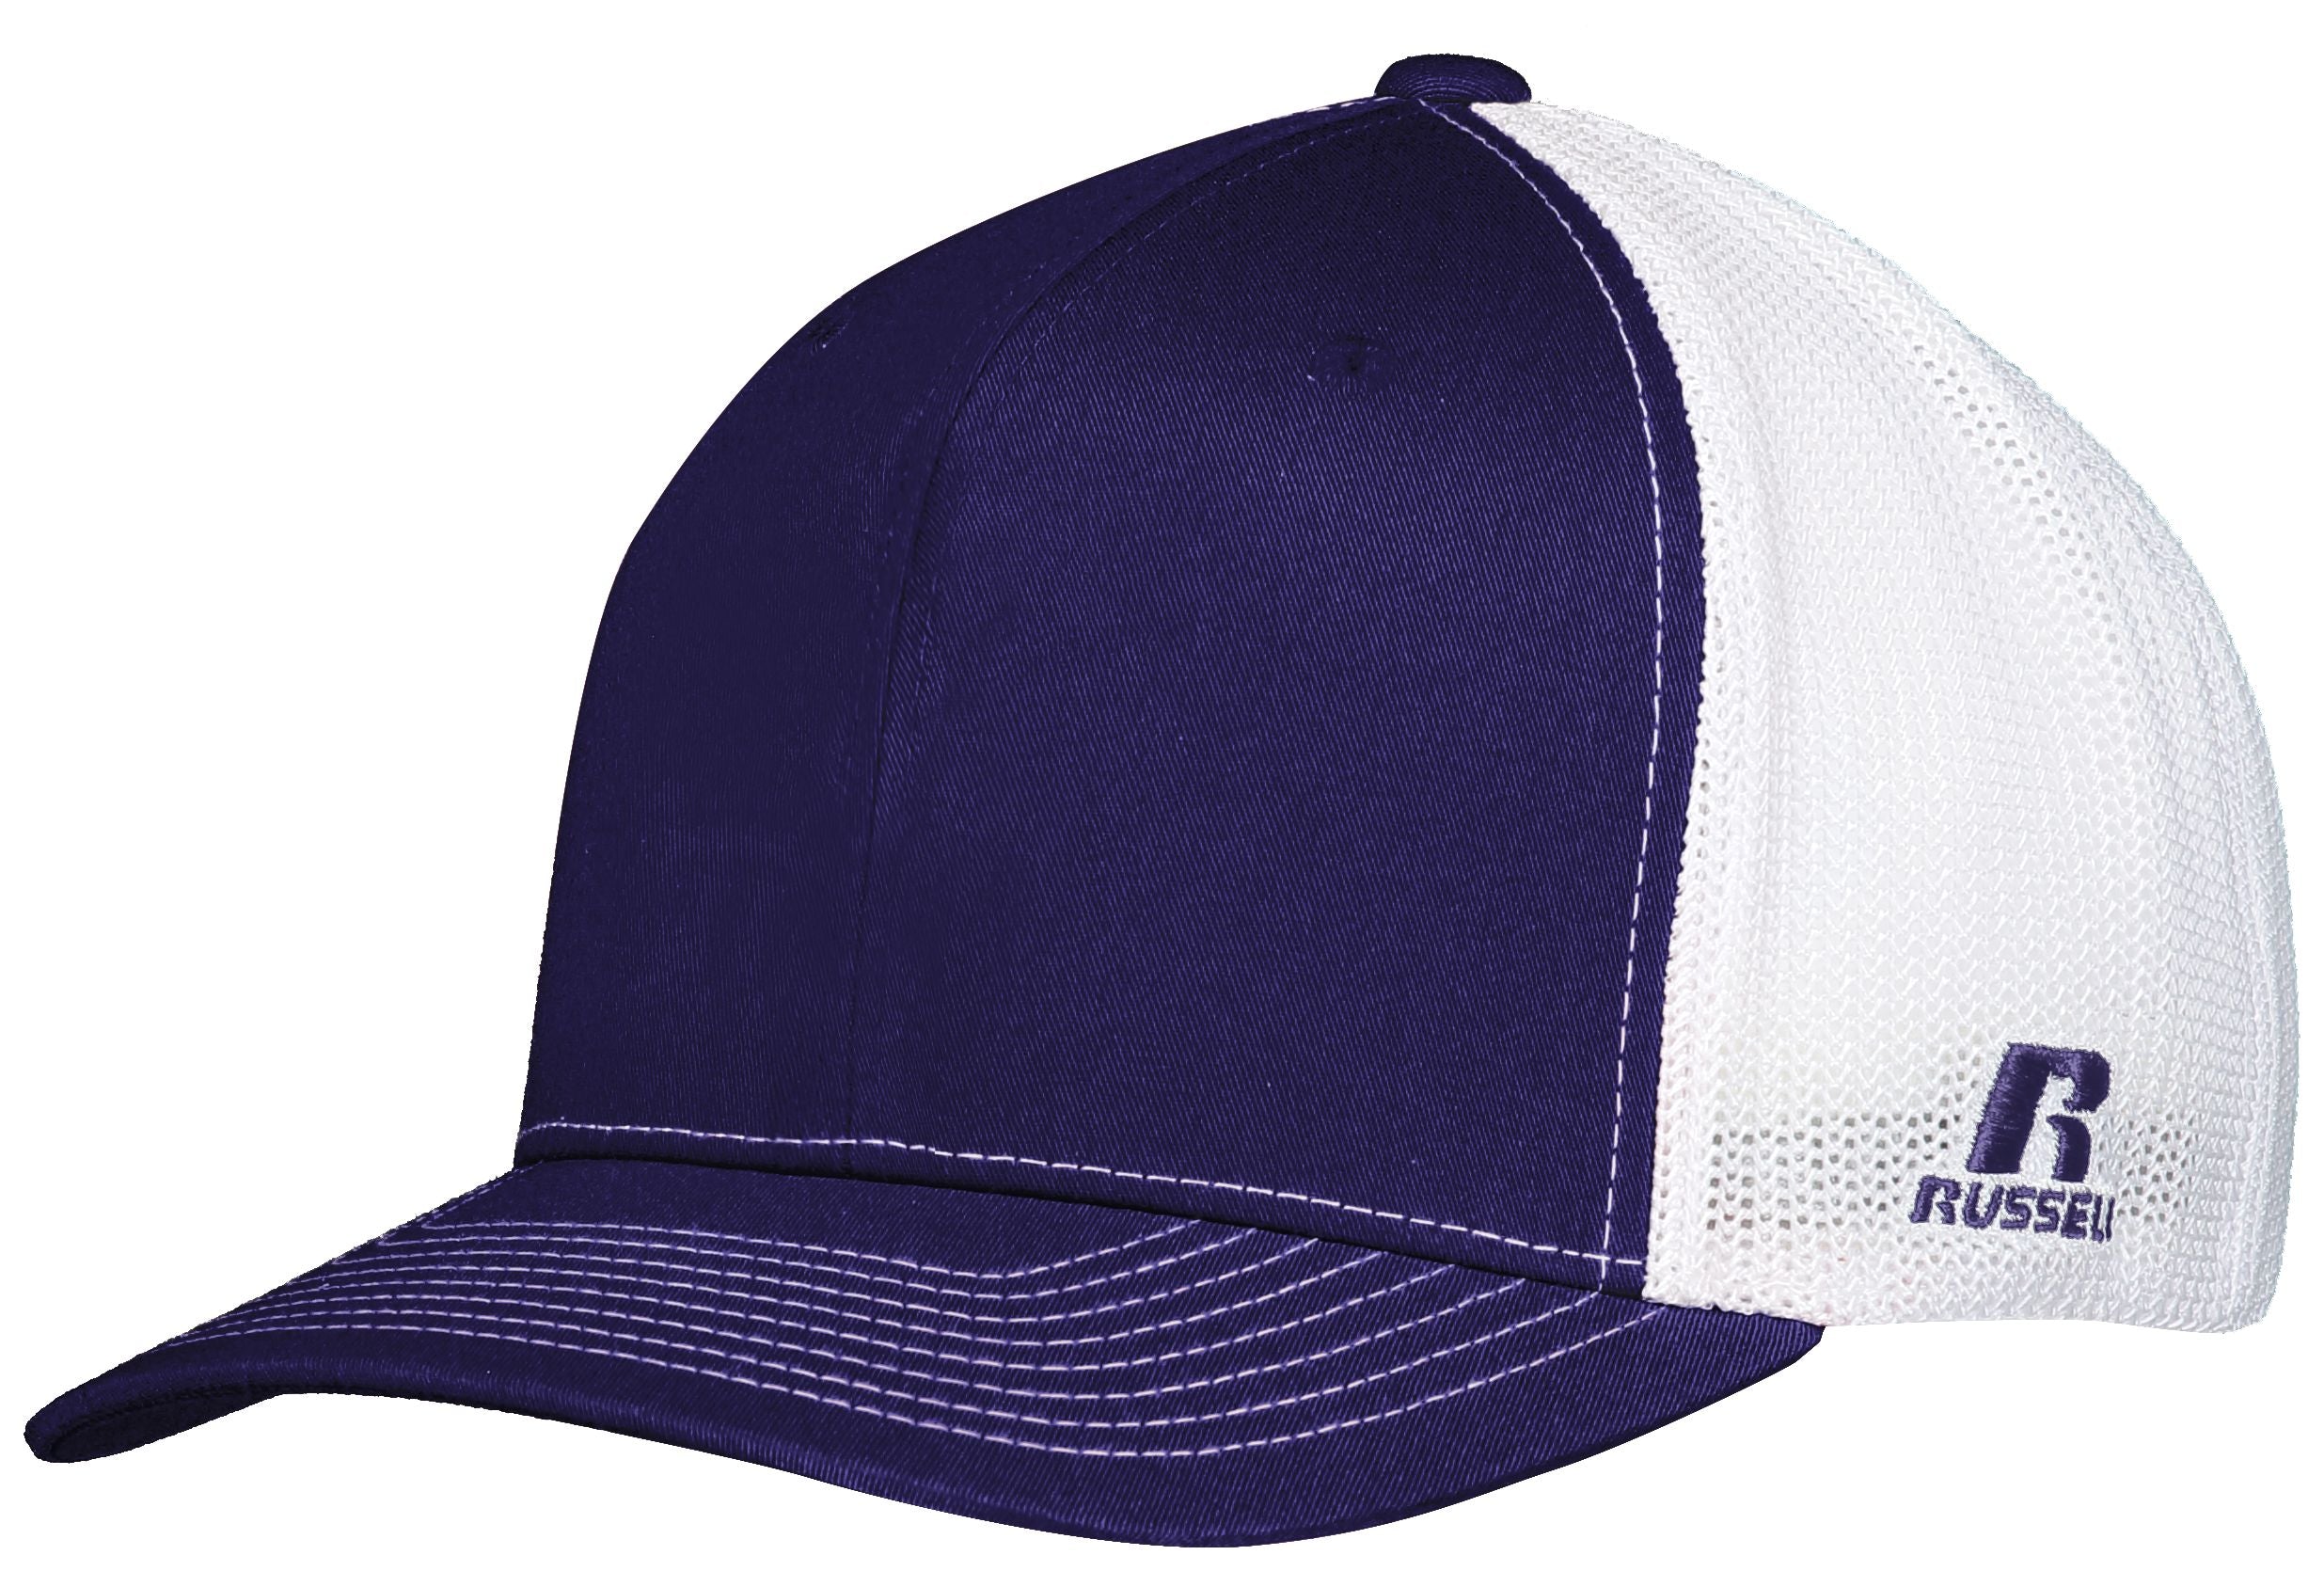 Russell Athletic Flexfit Twill Mesh Cap in Purple/White  -Part of the Adult, Headwear, Headwear-Cap, Russell-Athletic-Products product lines at KanaleyCreations.com